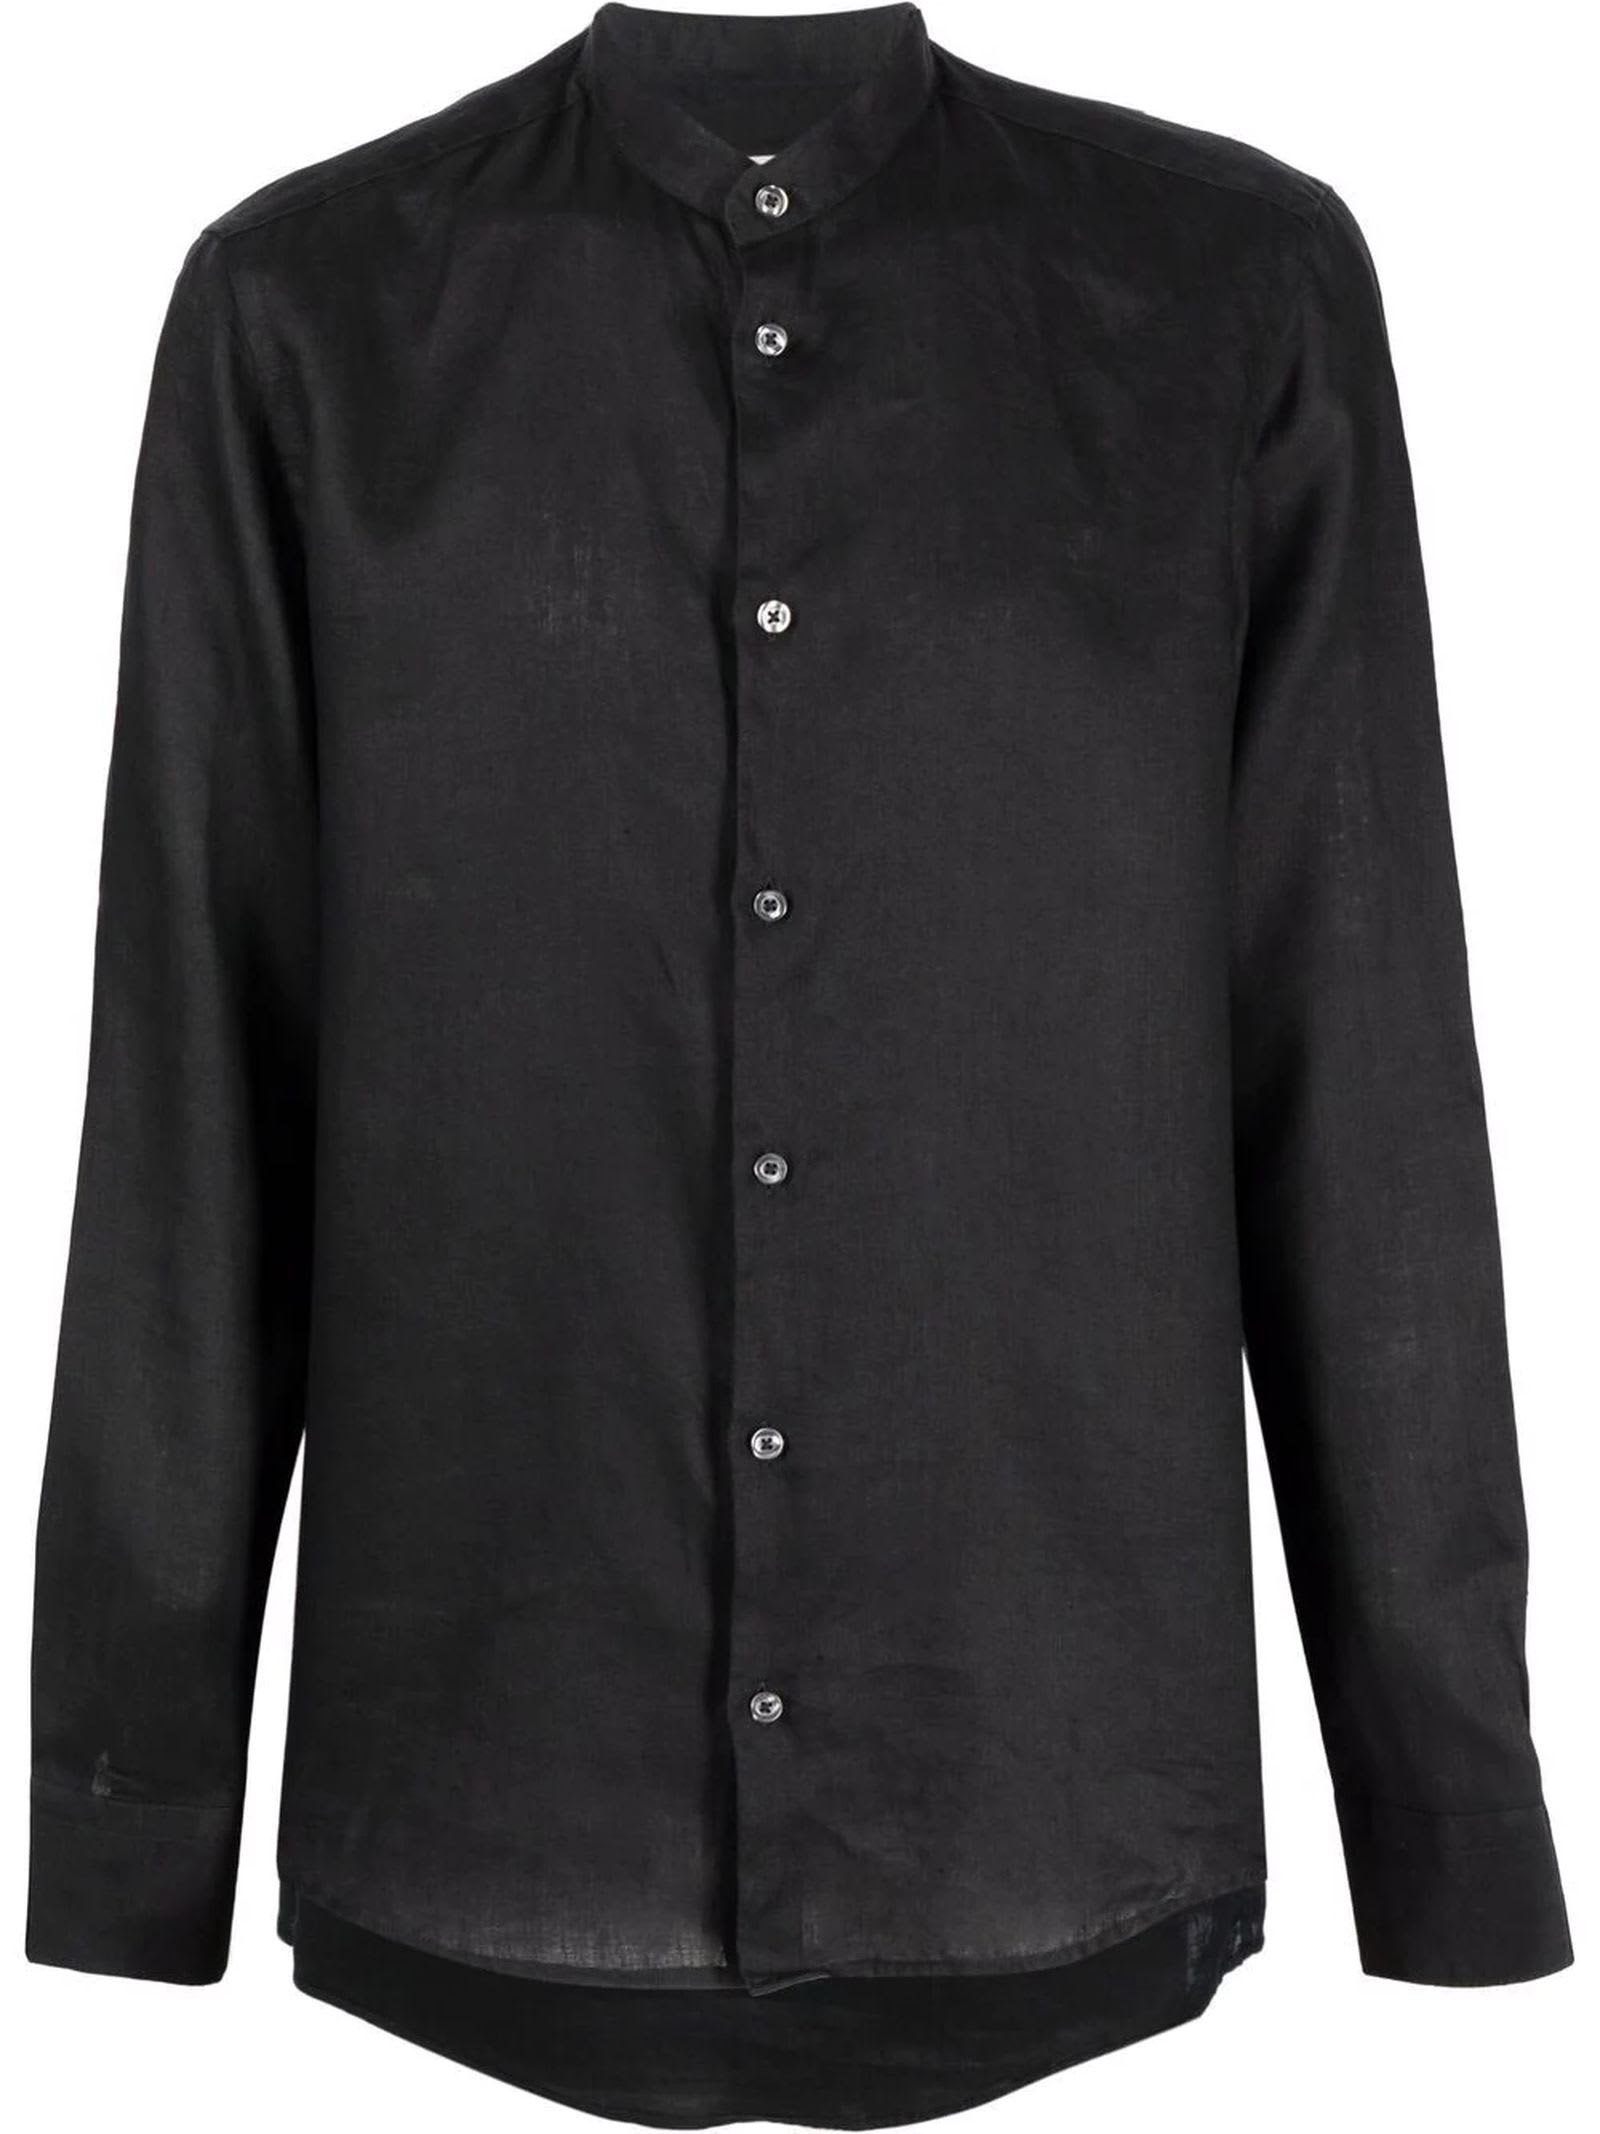 Low Brand Black Linen Shirt